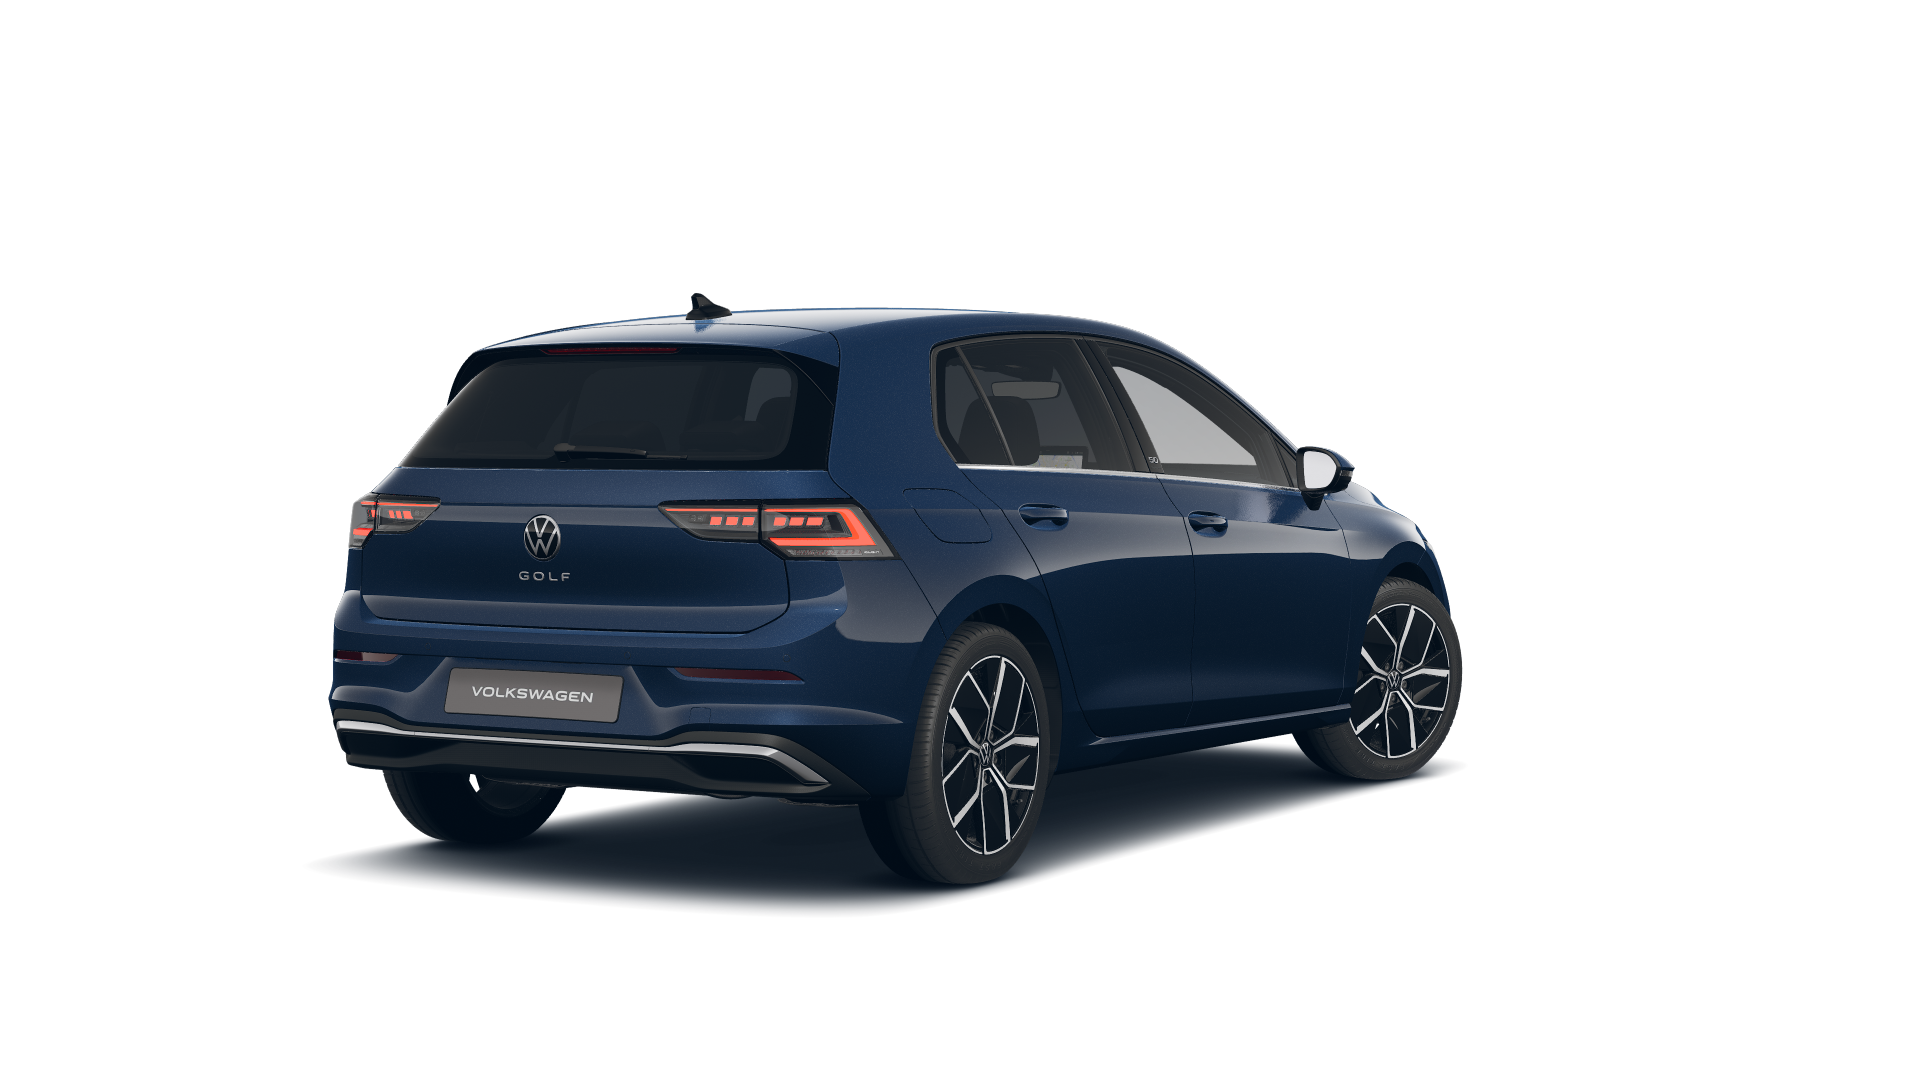 Volkswagen Golf 50 Aniversario 1.5 TSI 110 kW (150 CV)